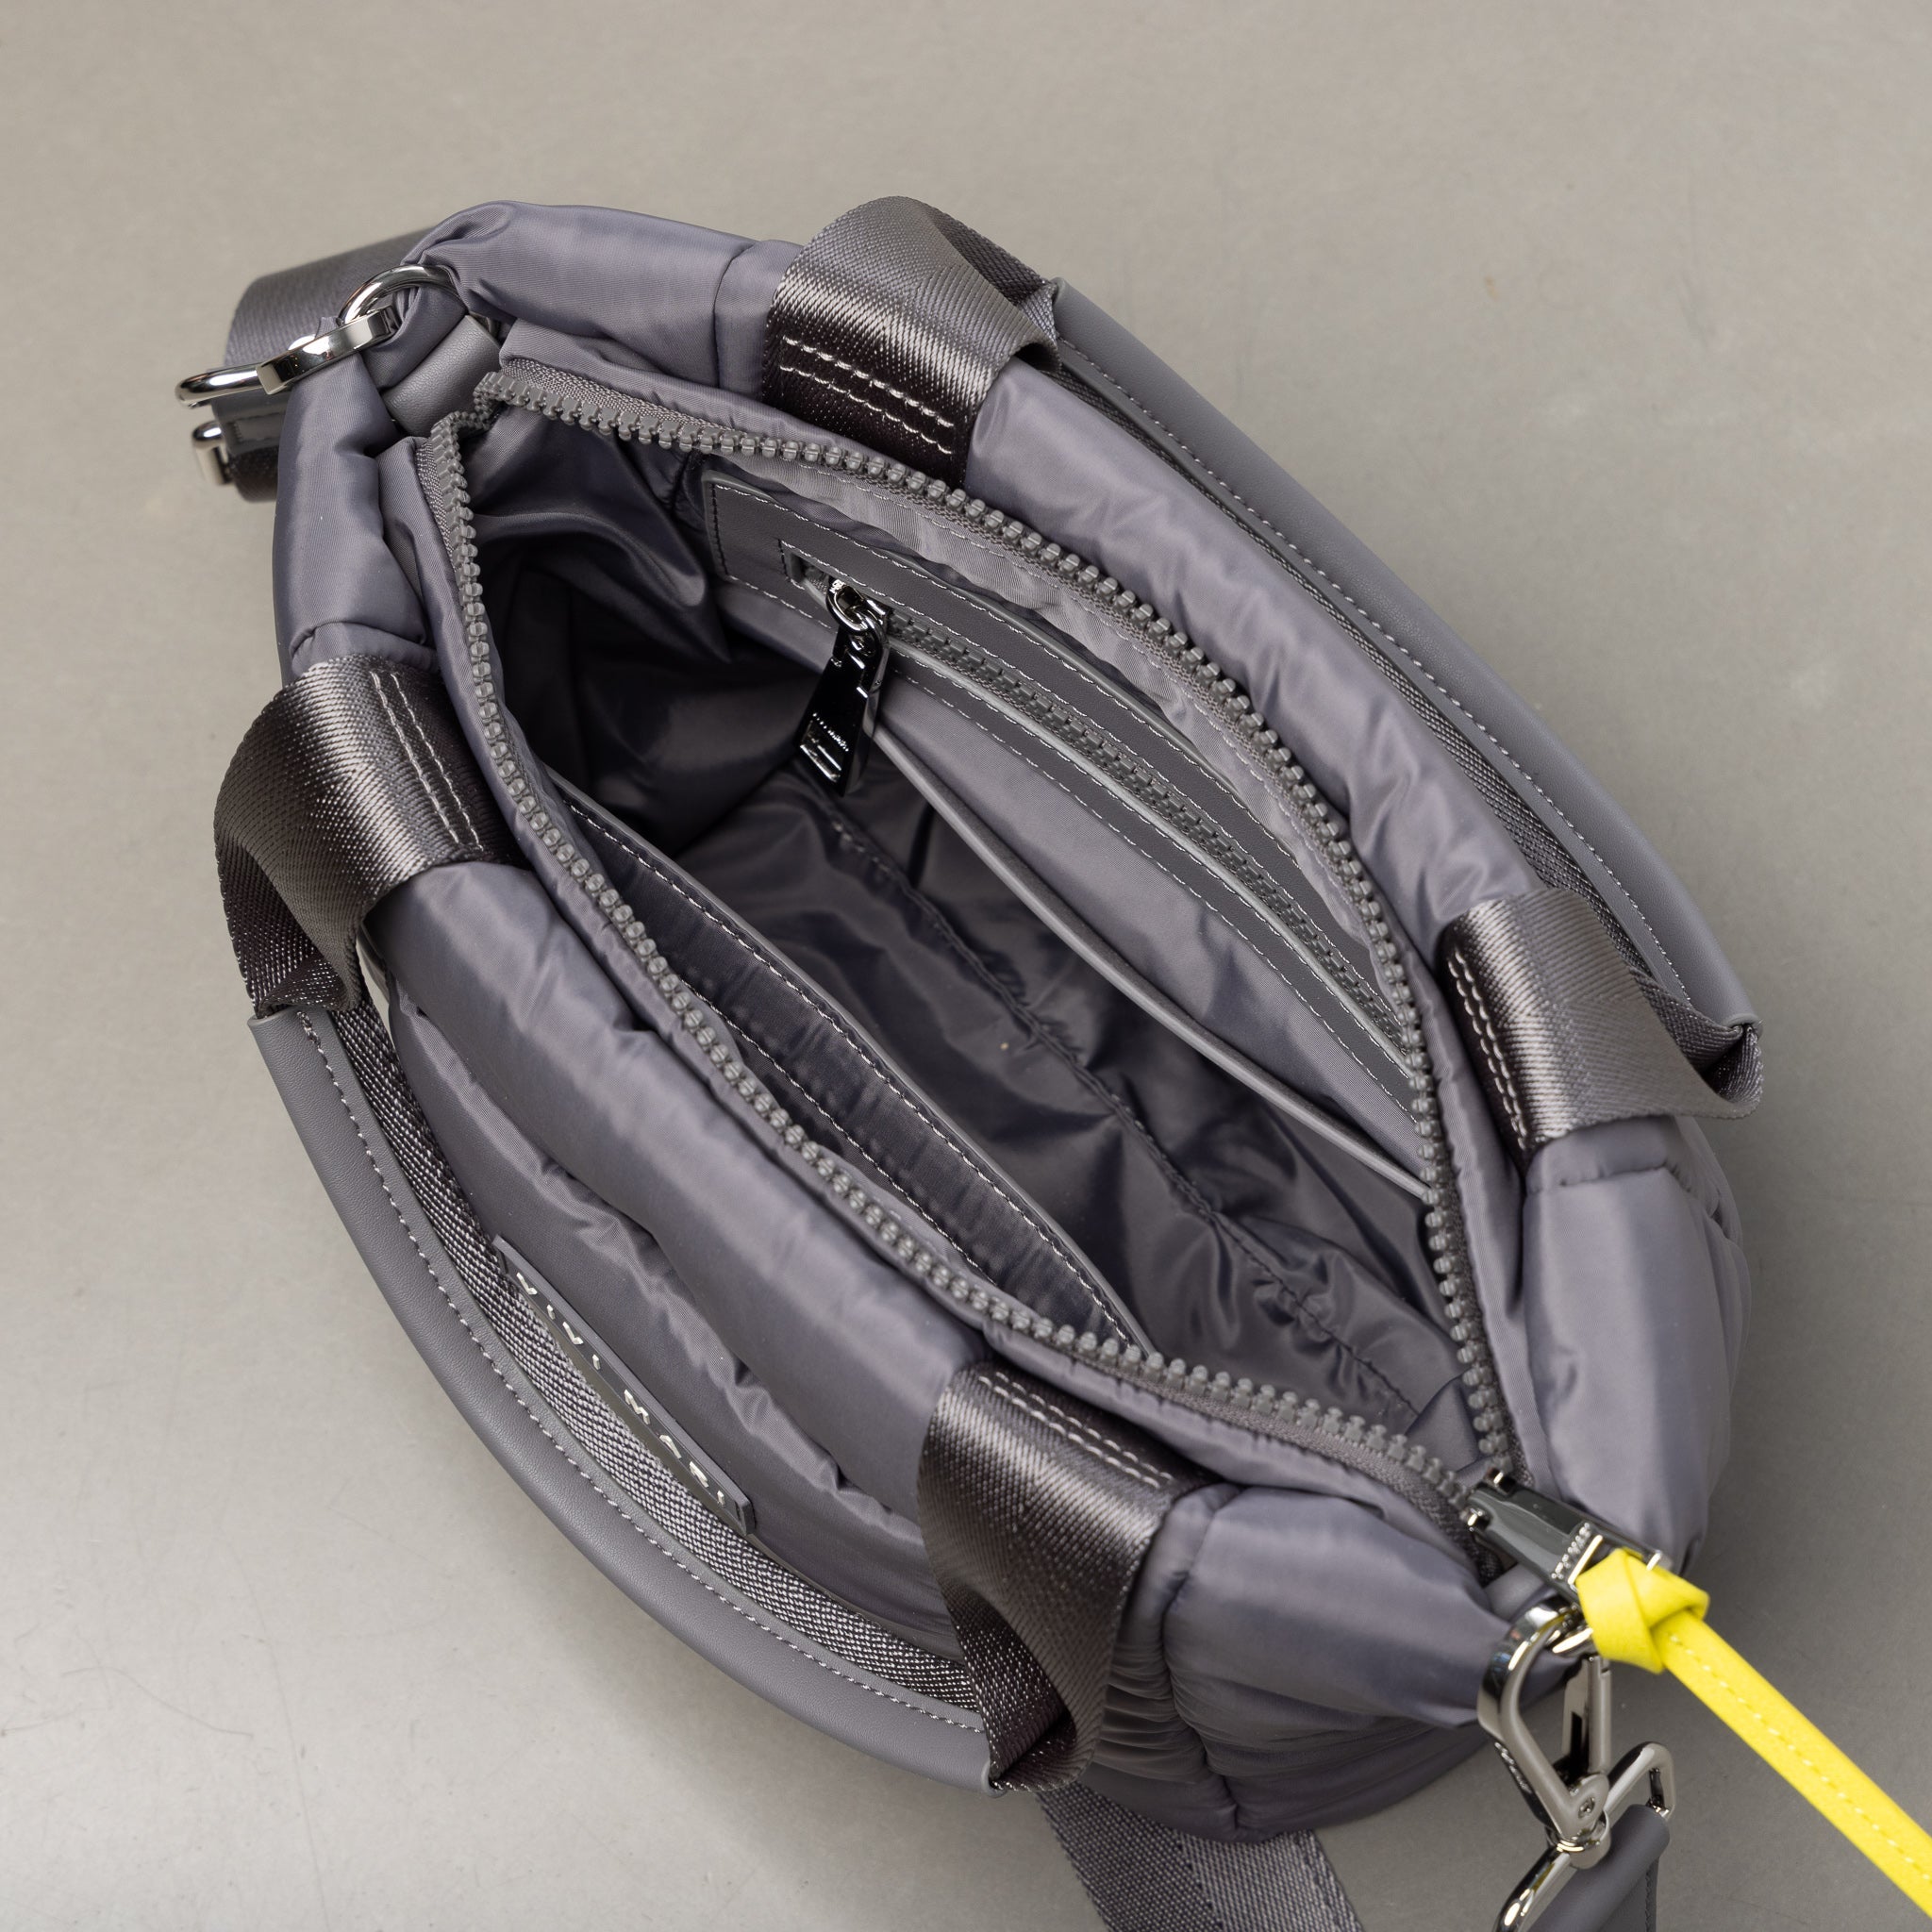 padded tote bag small + strap basic woven slim - taupe - VIVI MARI